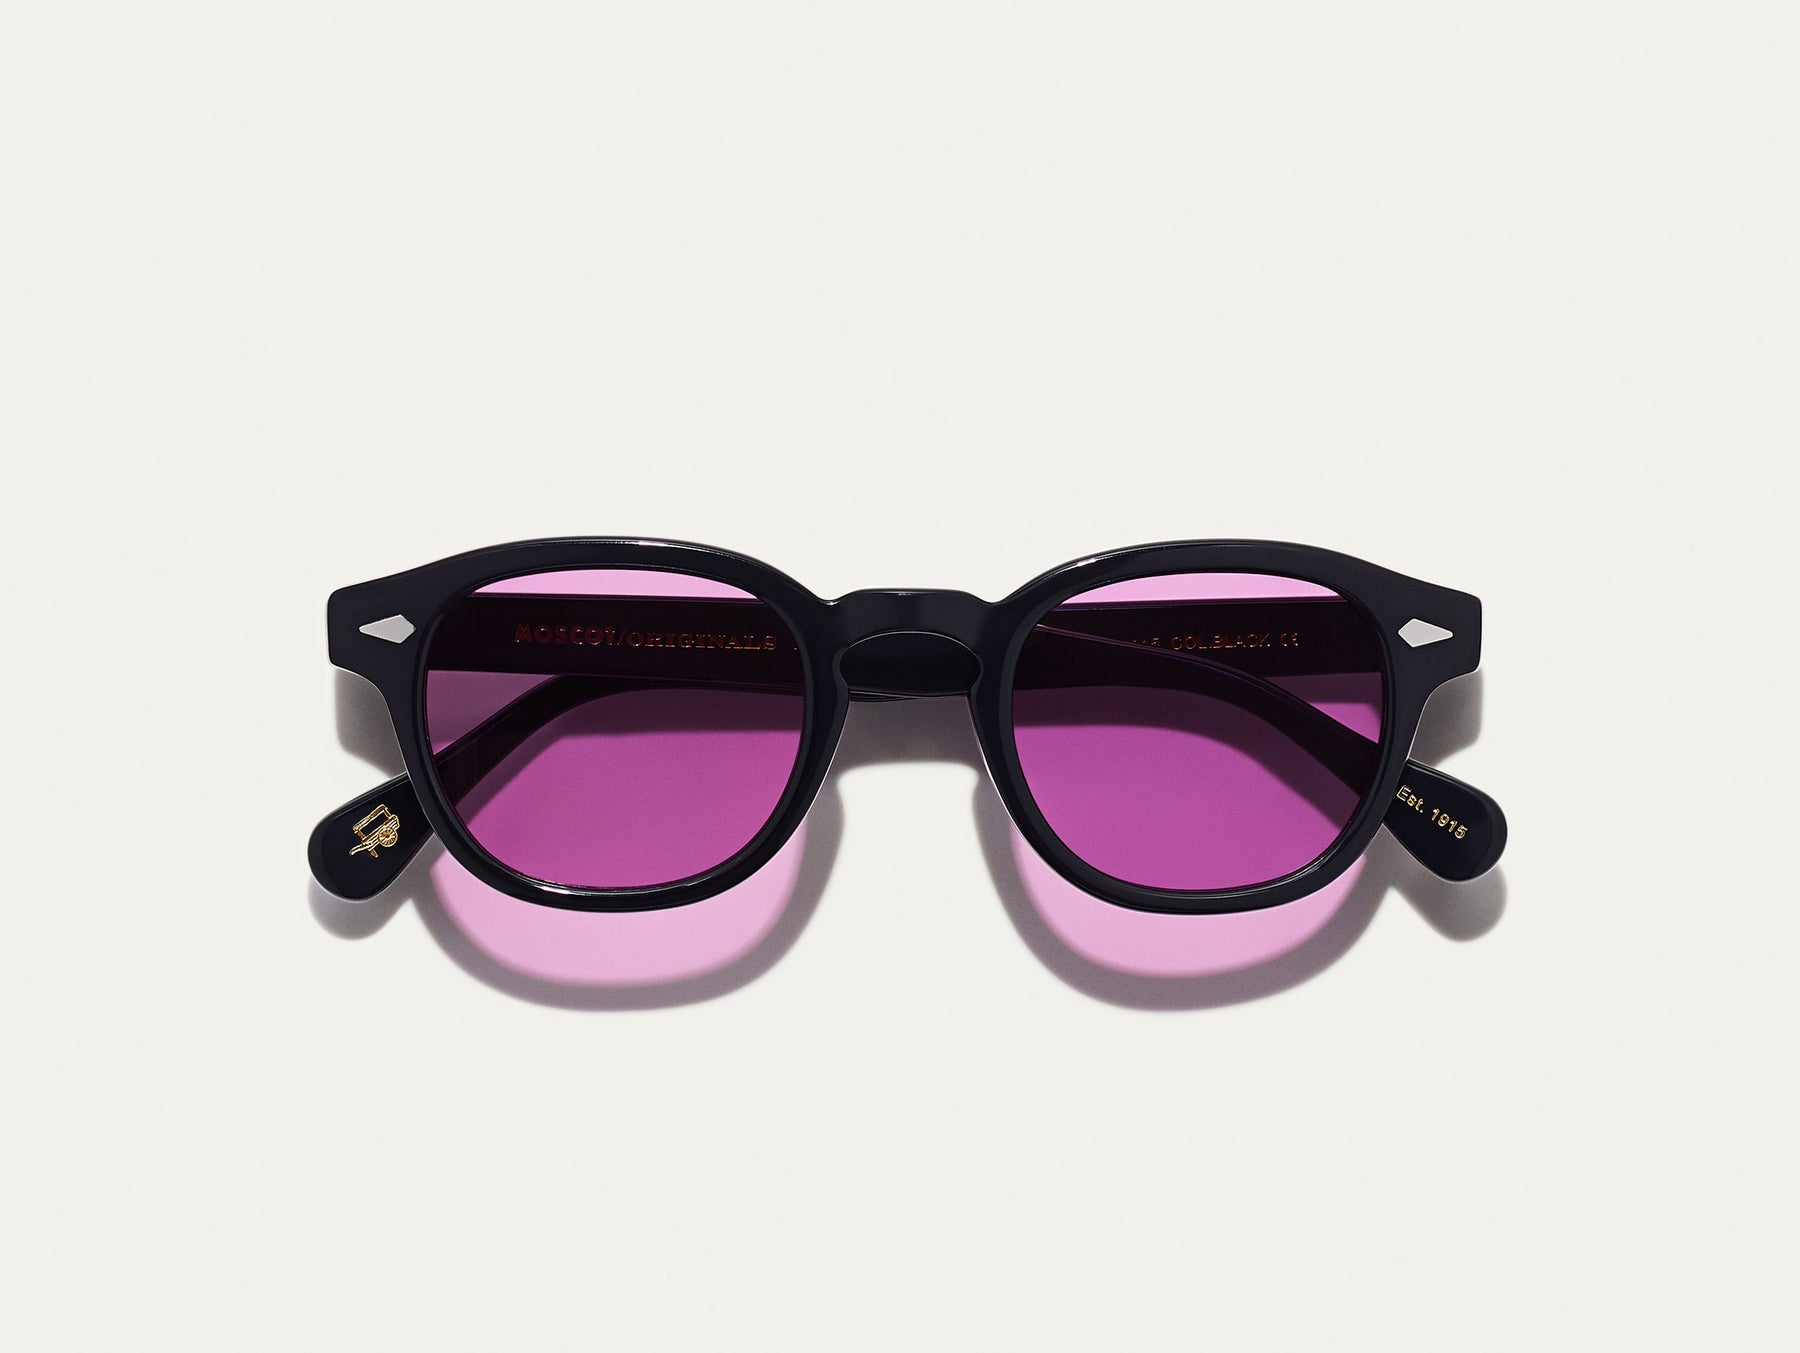 The LEMTOSH Black with Purple Nurple Tinted Lenses